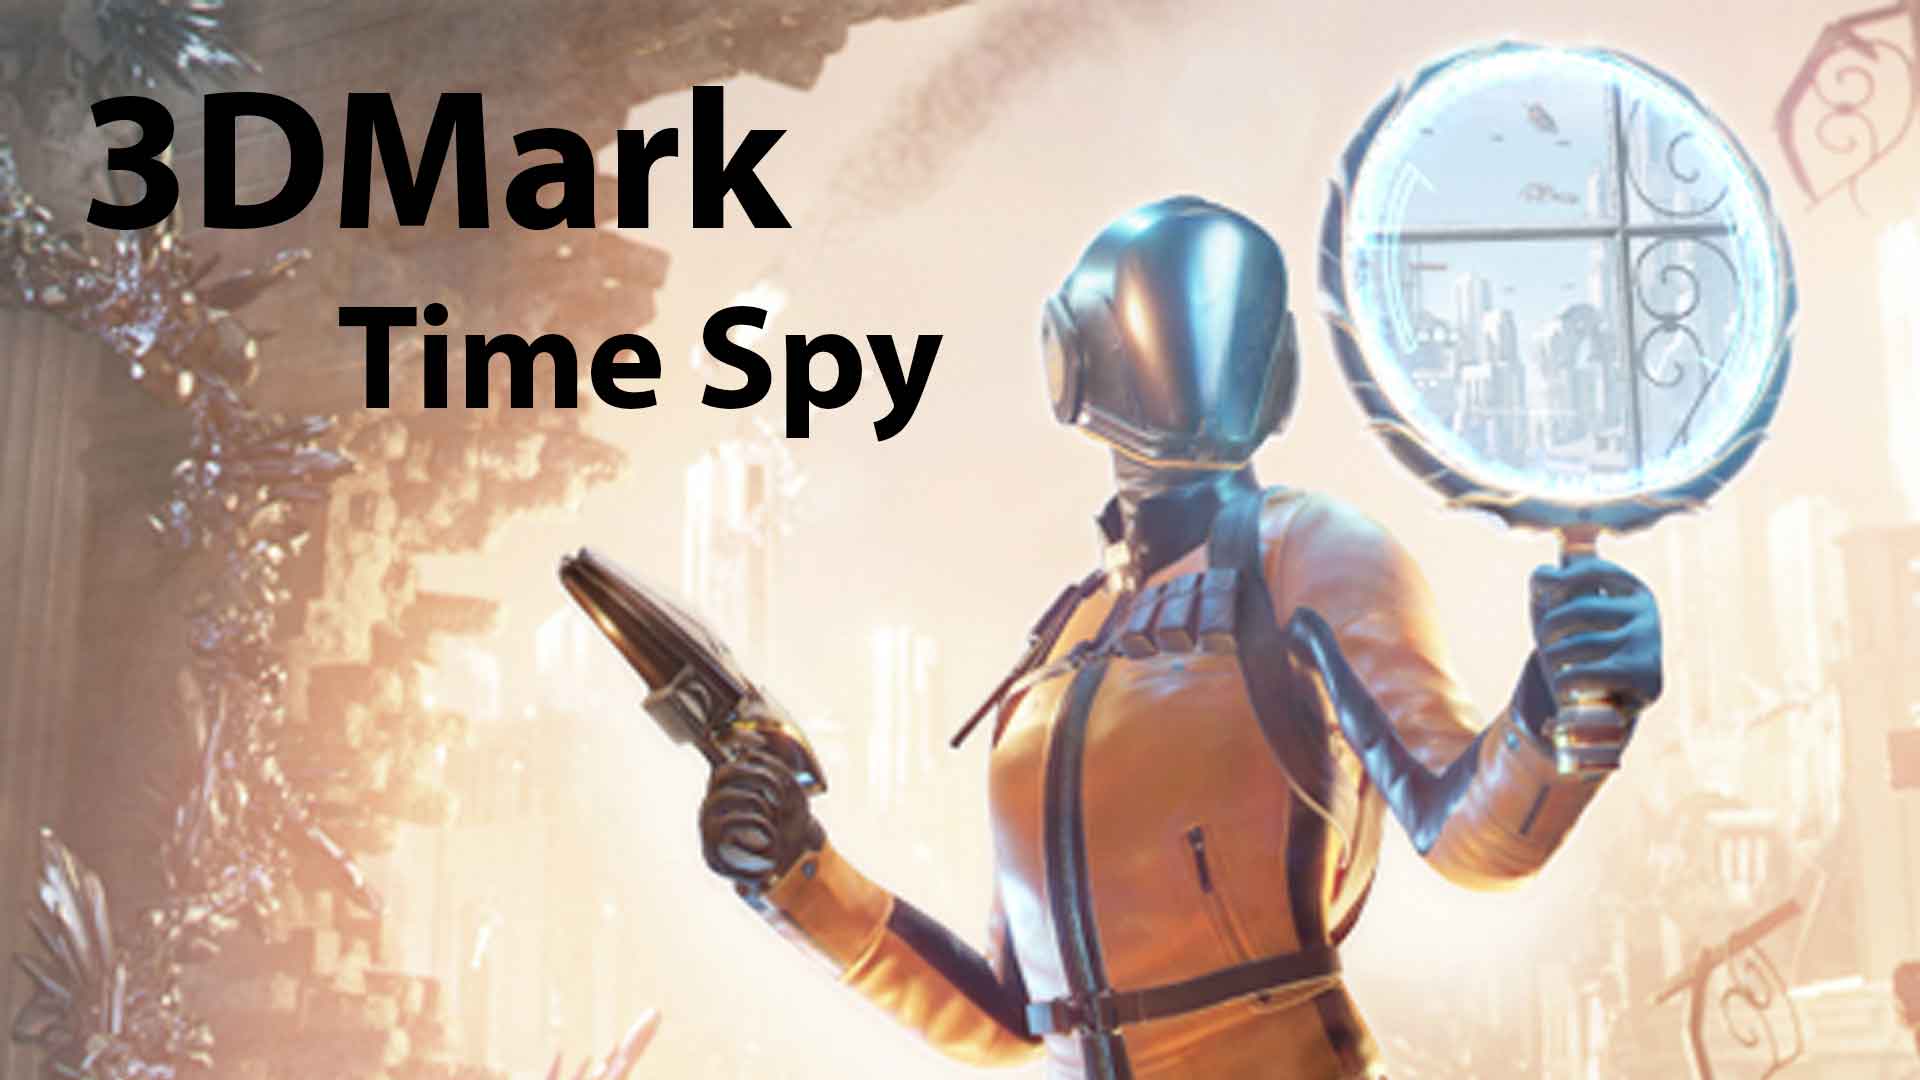 Benchmark 3DMark Time Spy